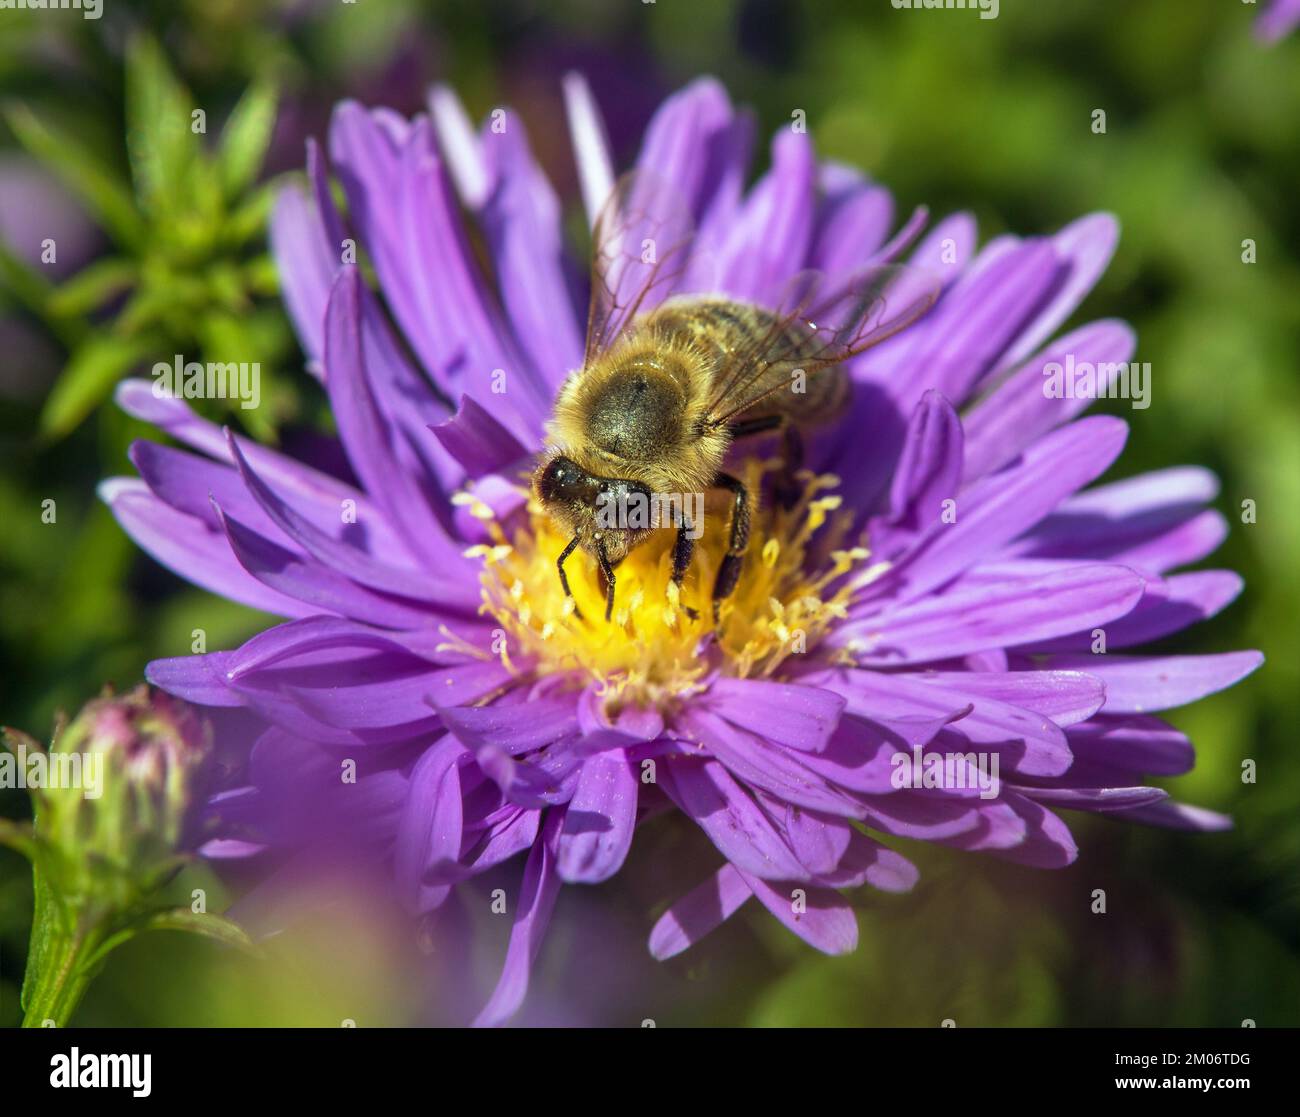 bee or honeybee in Latin Apis Mellifera, european or western honey bee sitting on the blue yellow violet or purple flower Stock Photo